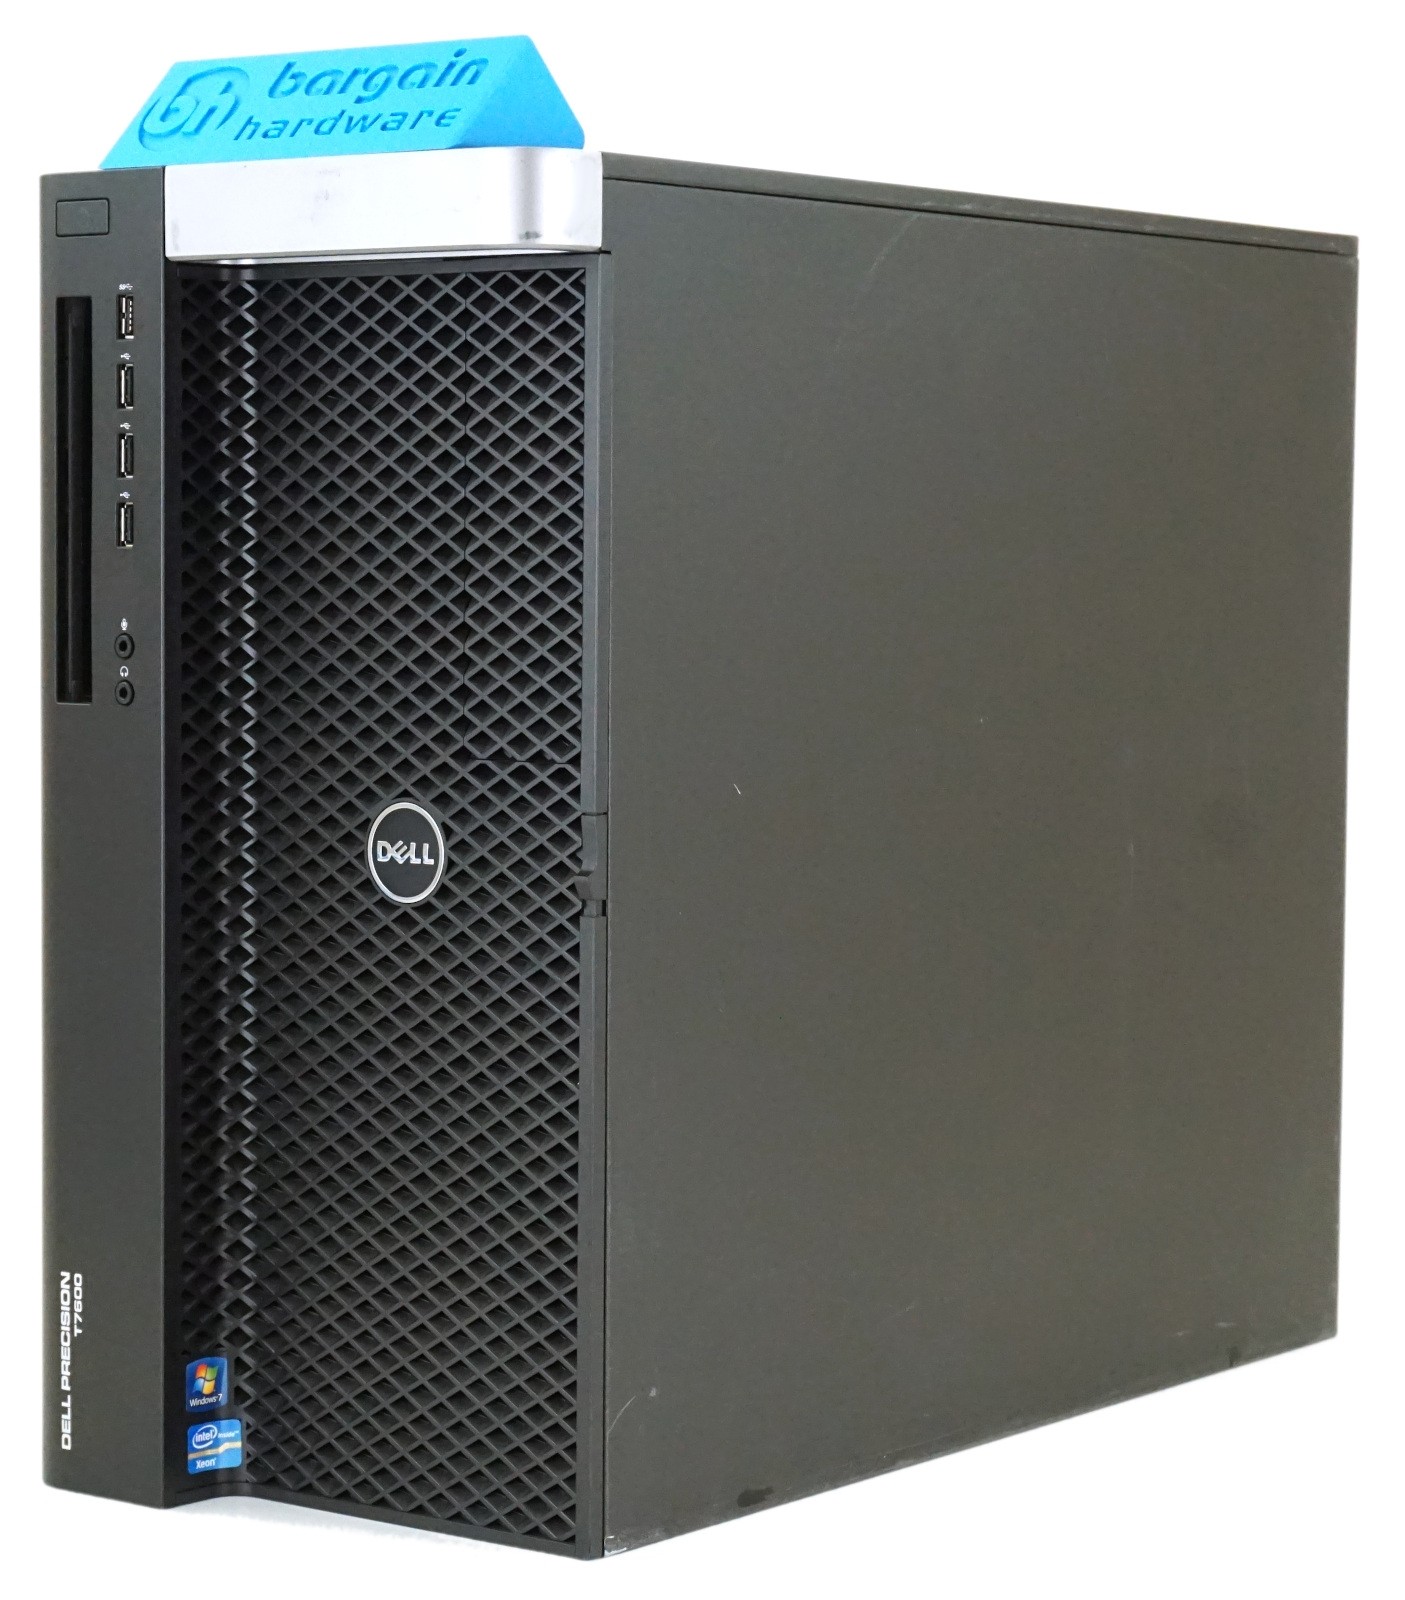 Dell Precision T7600 Workstation | Configure-to-Order